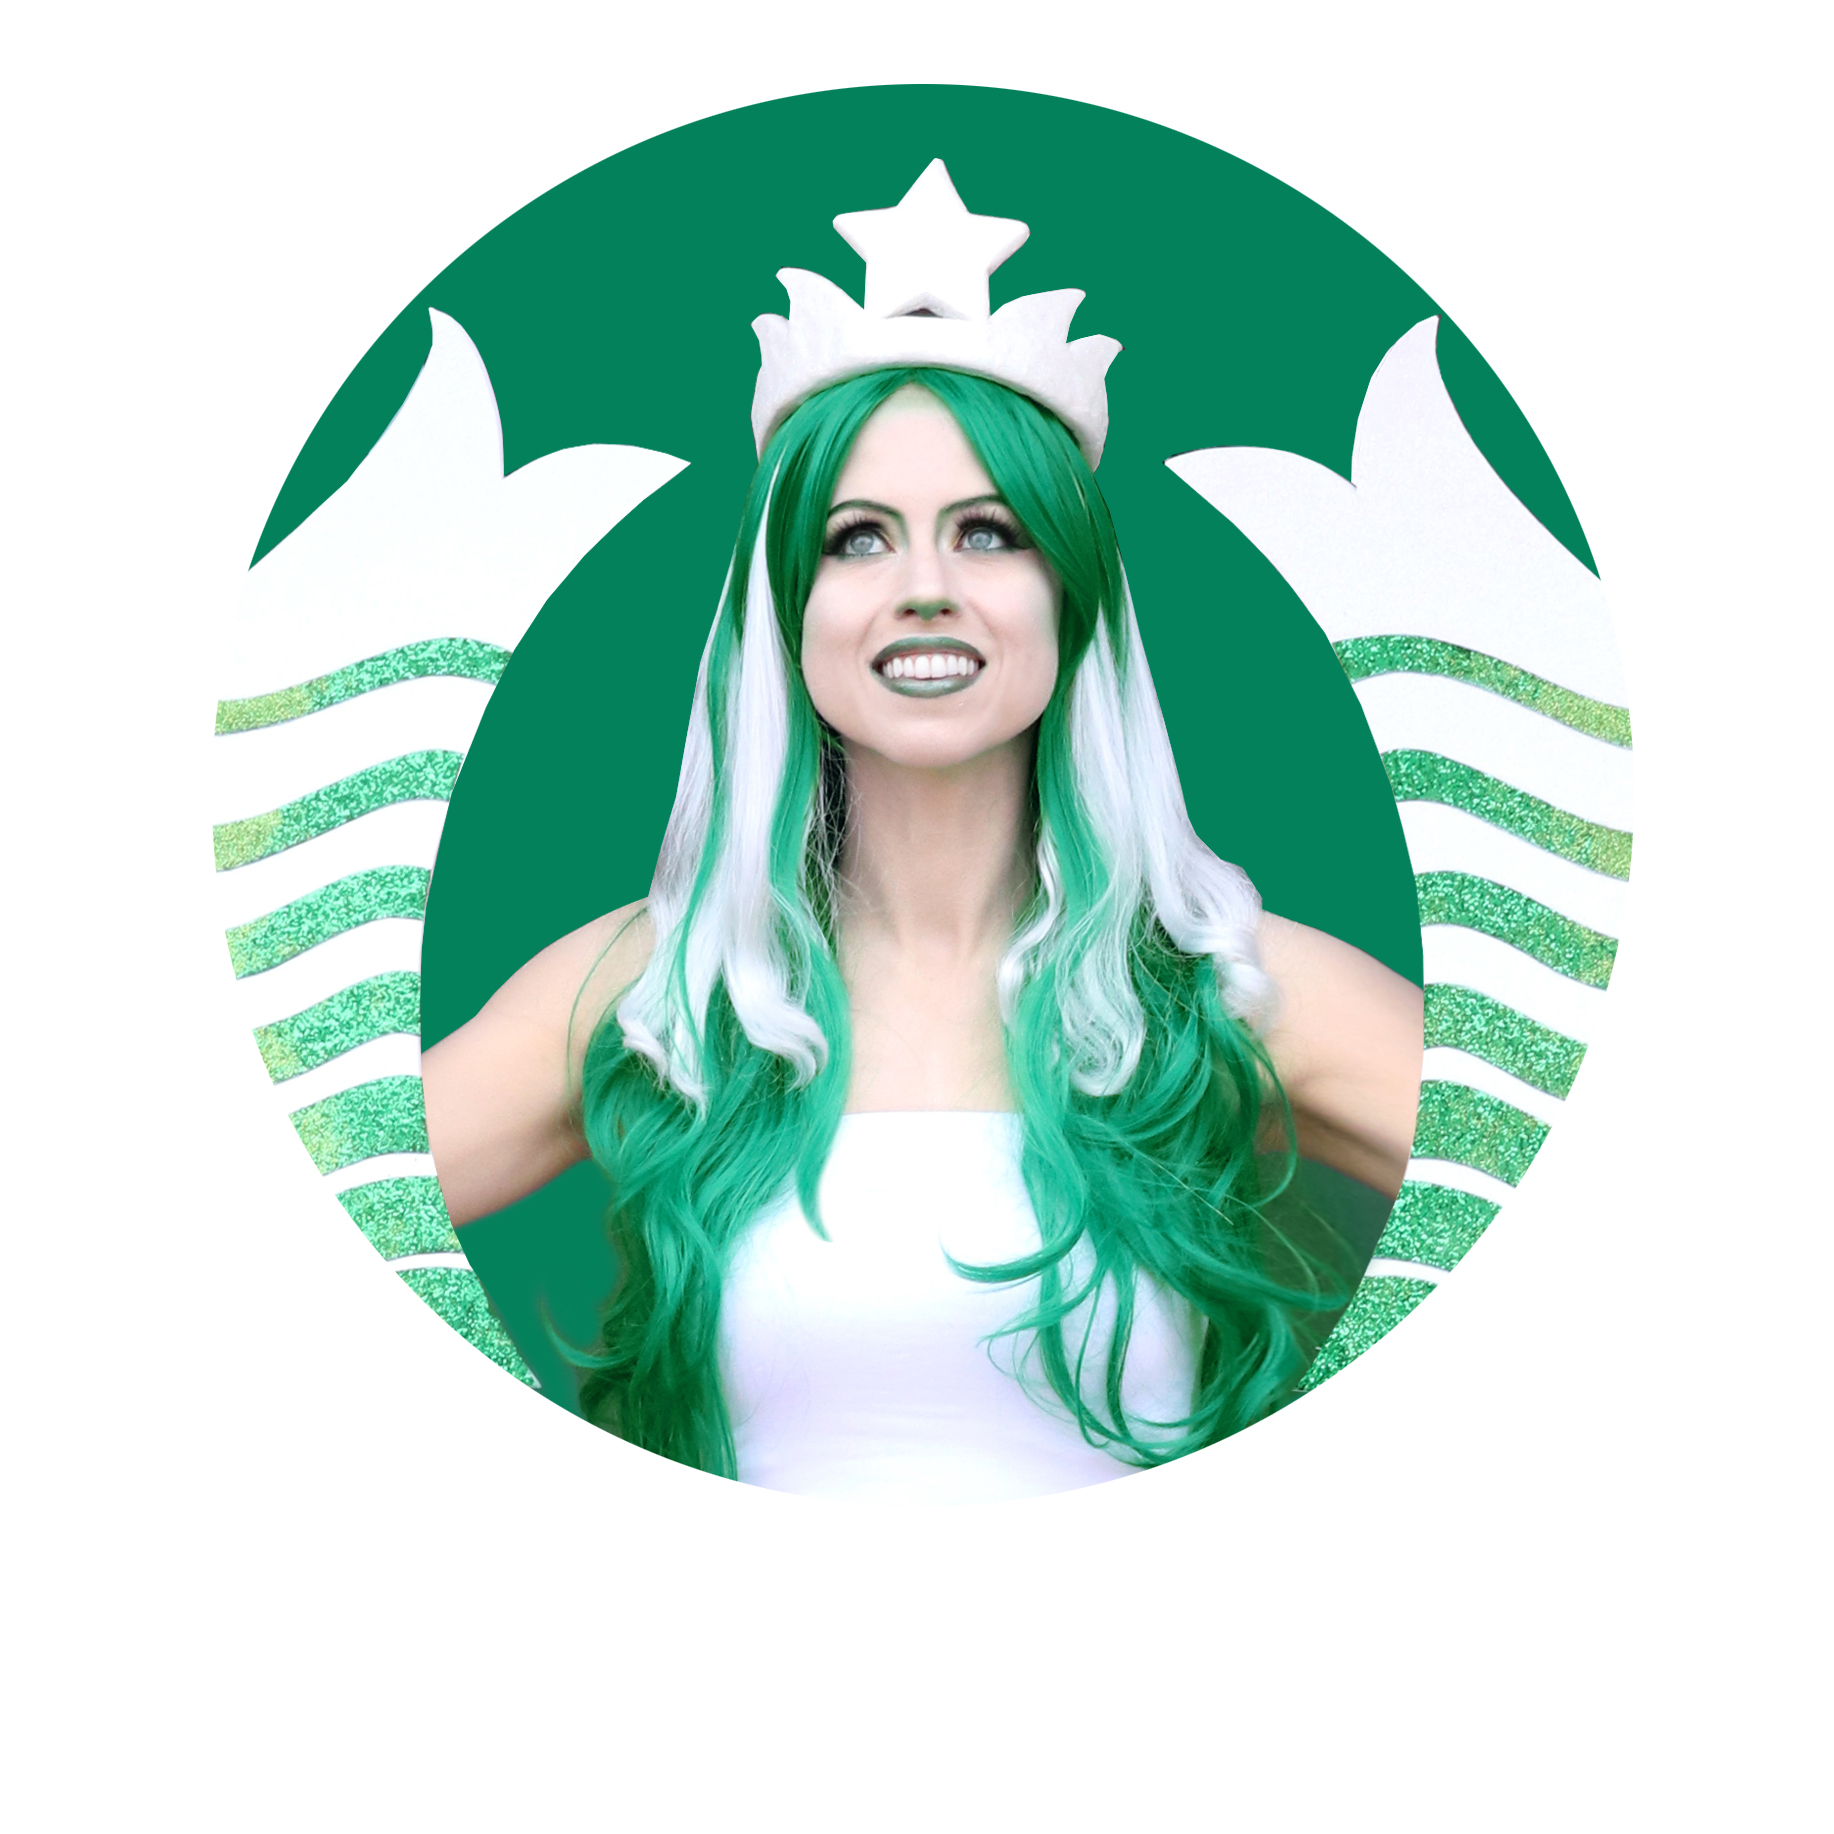 Starbucks Mermaid costume.